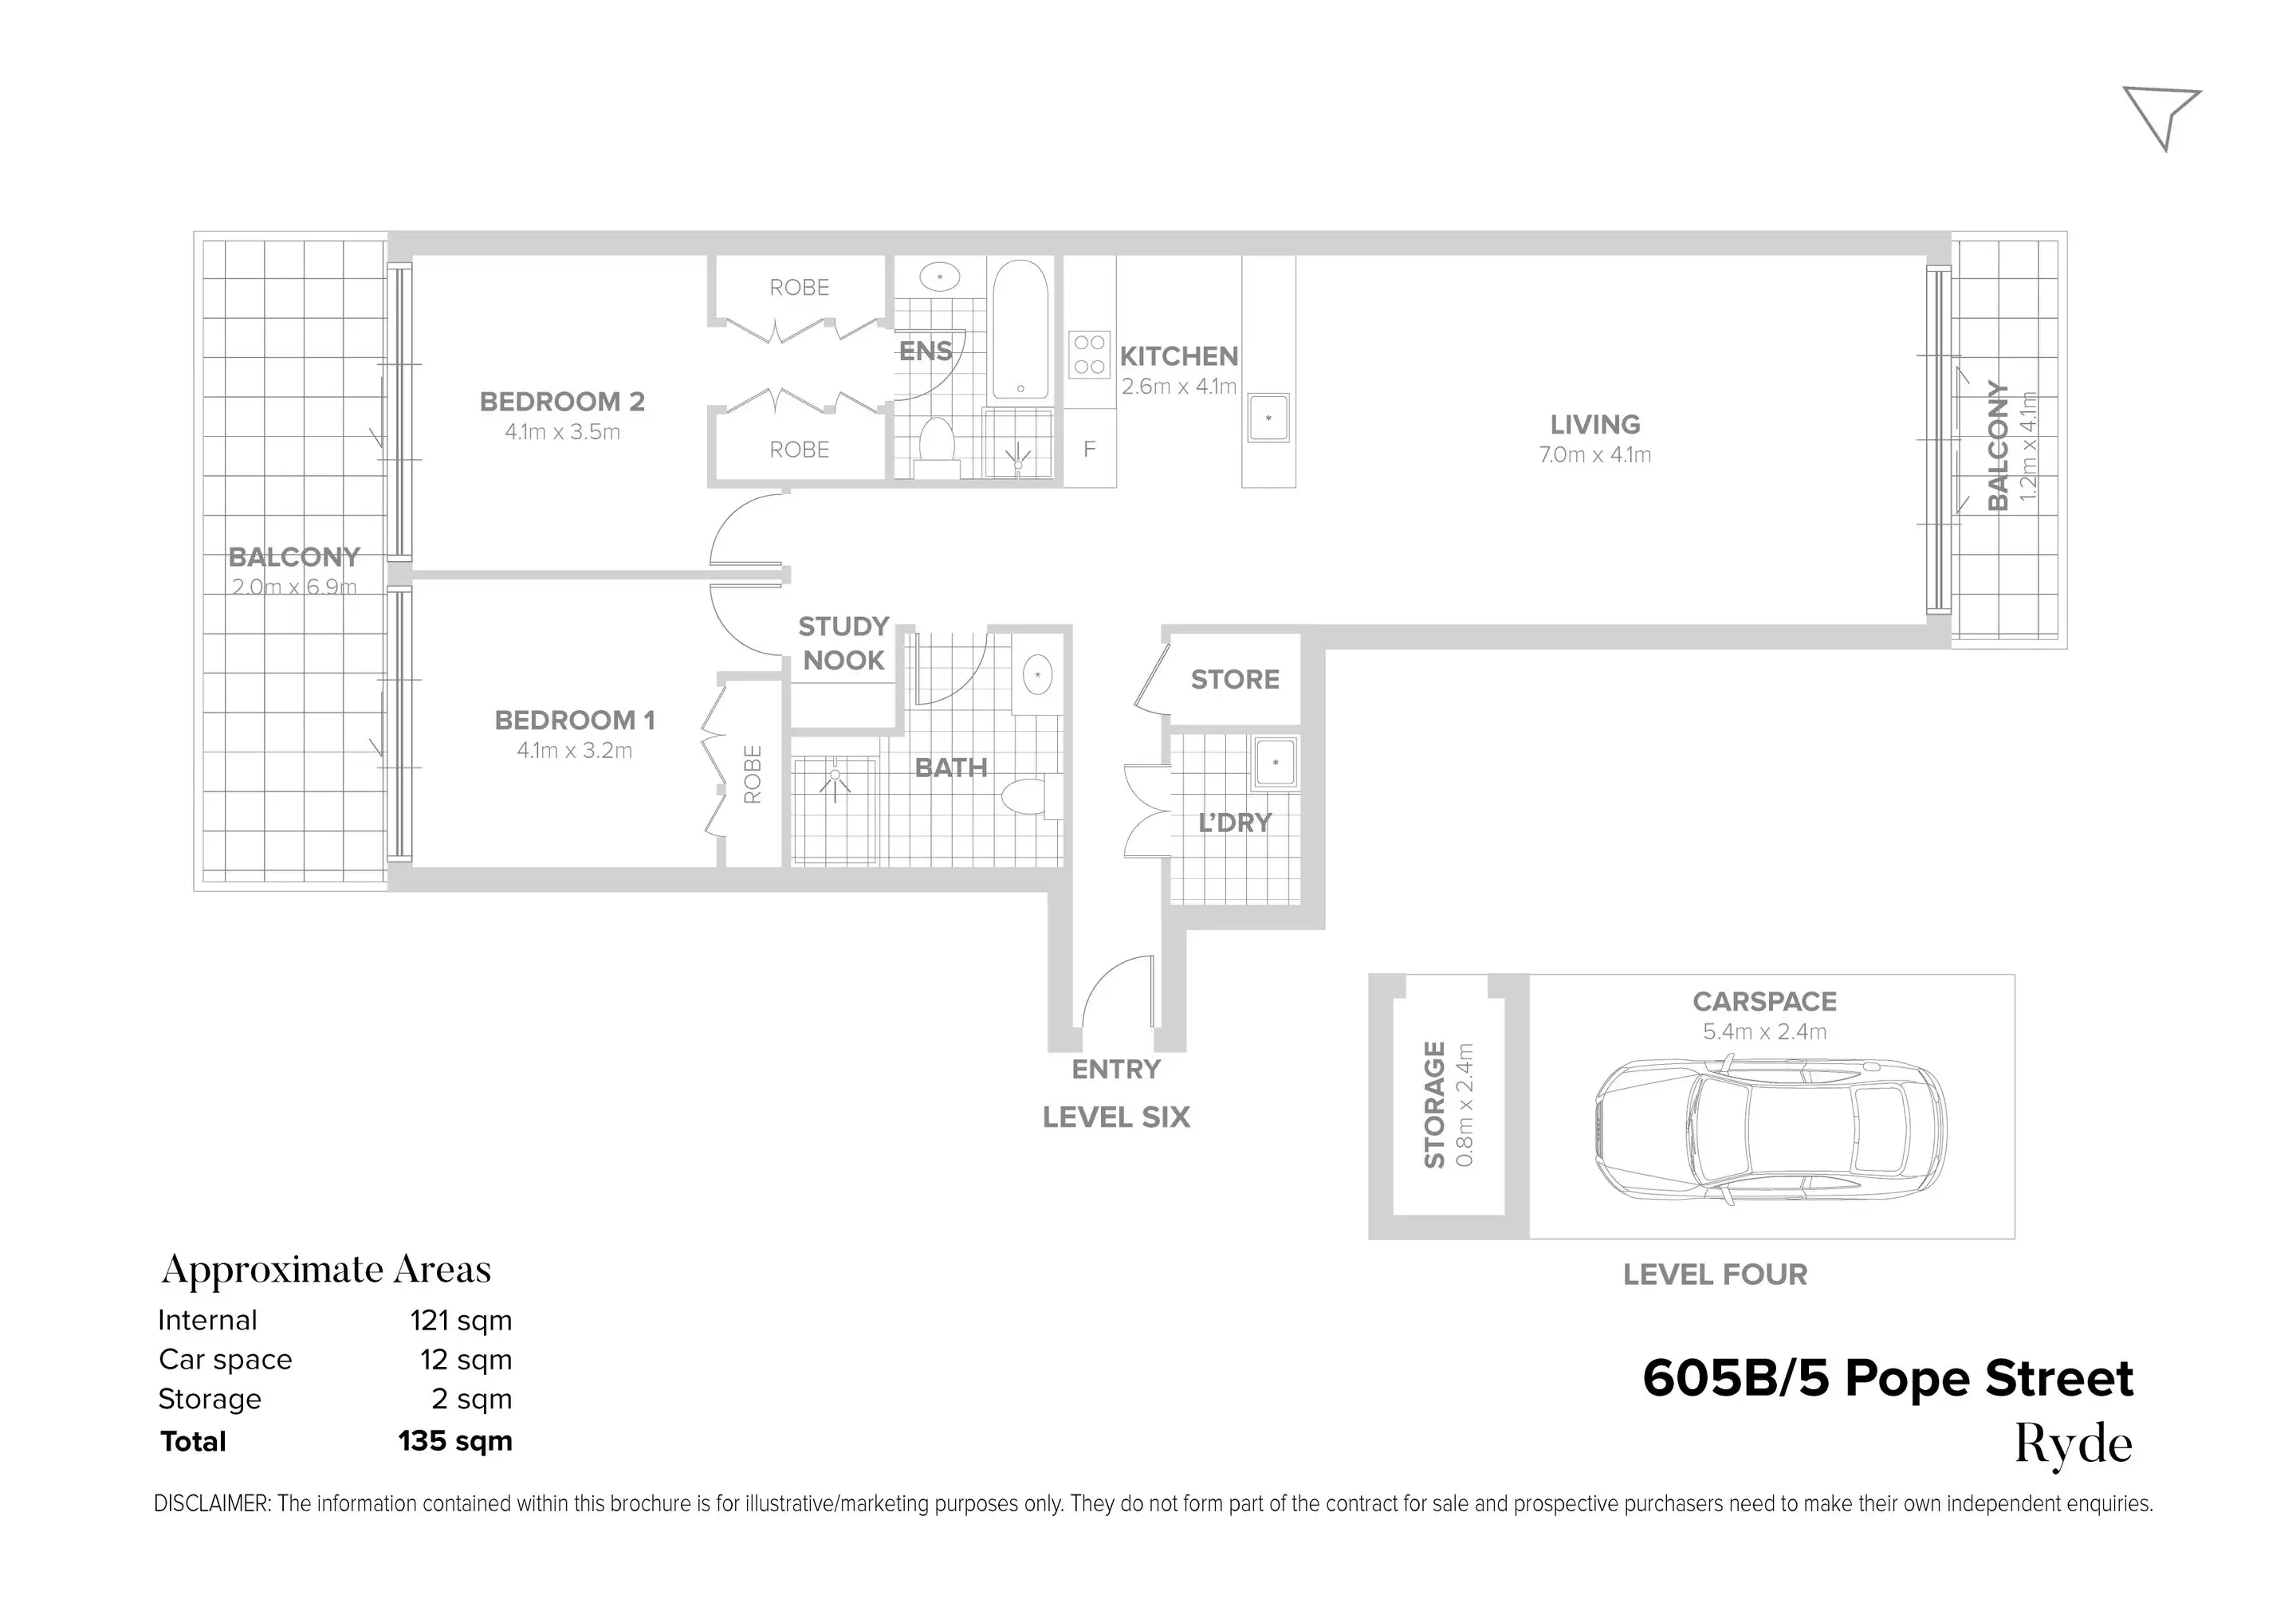 605B/5 Pope Street, Ryde Sold by Chidiac Realty - floorplan